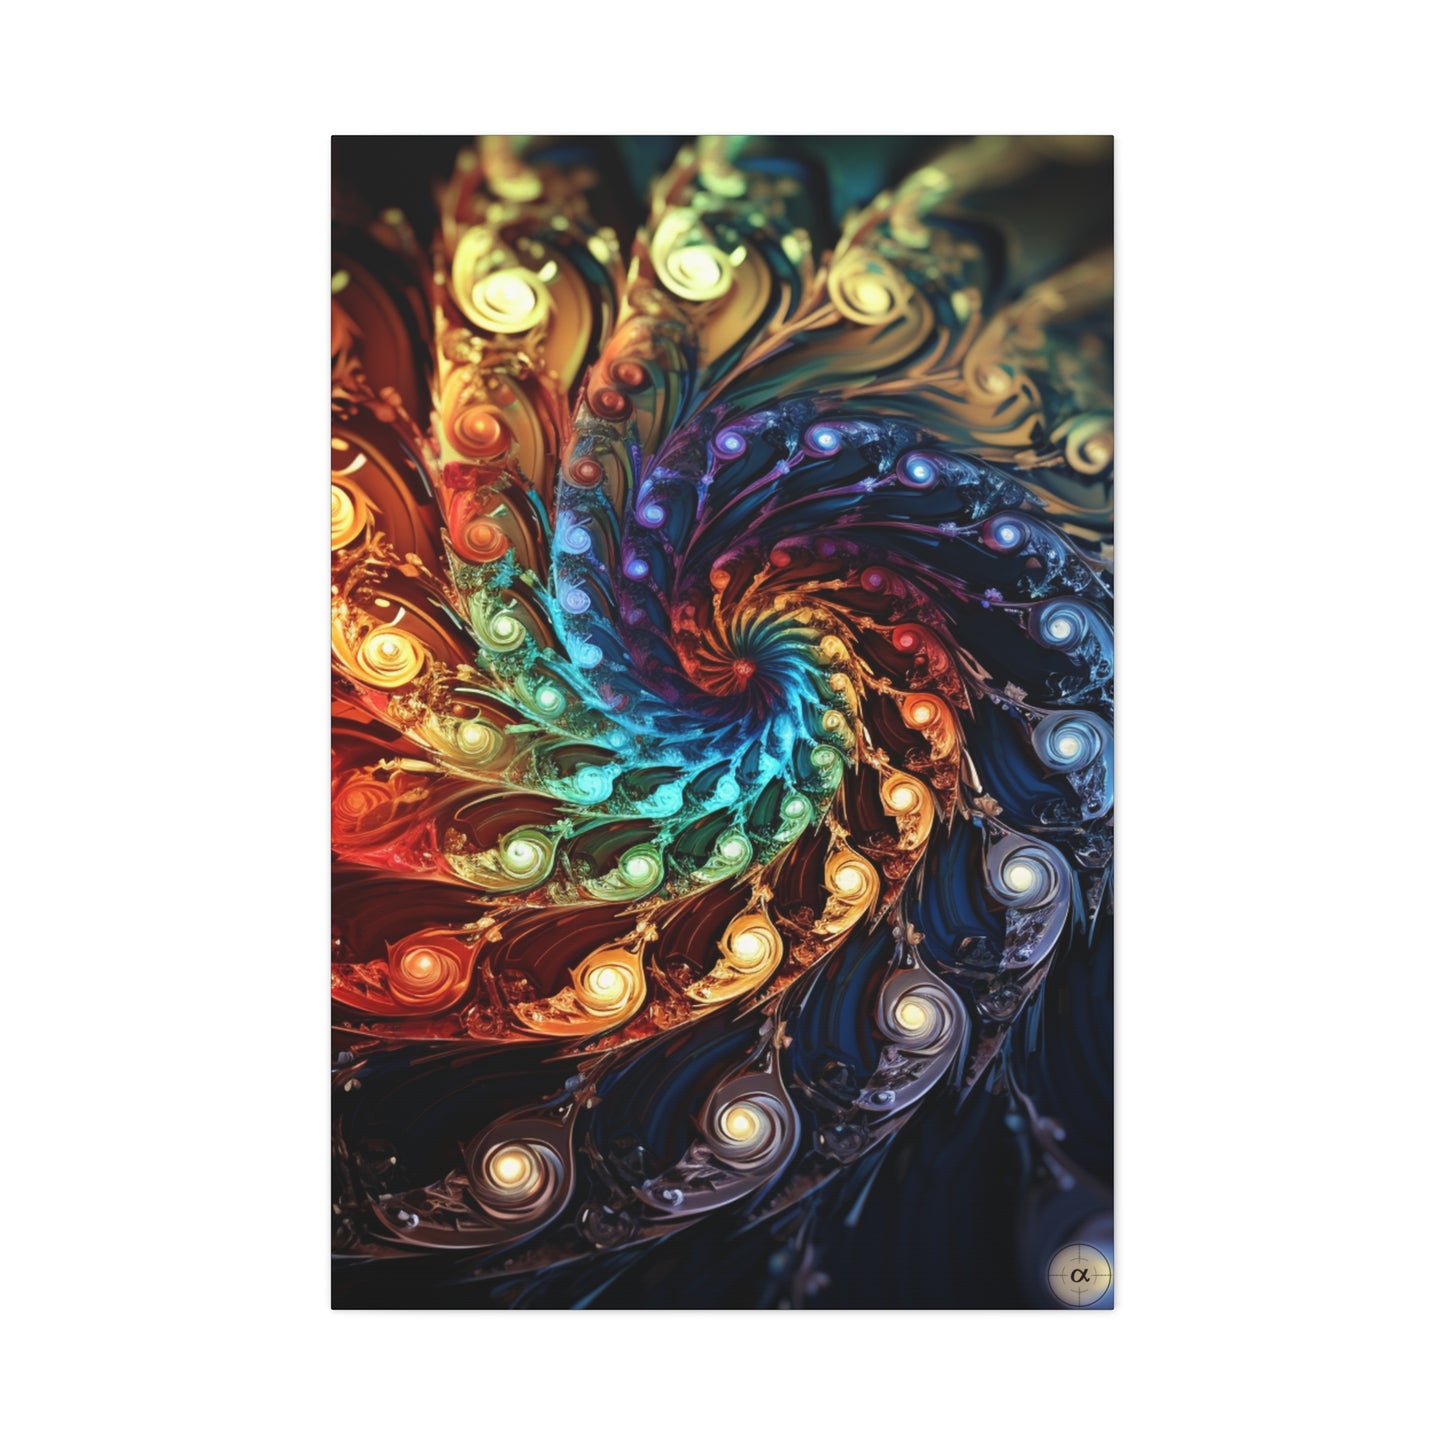 Art by Kendyll: "Peacock Pinwheel" on Canvas